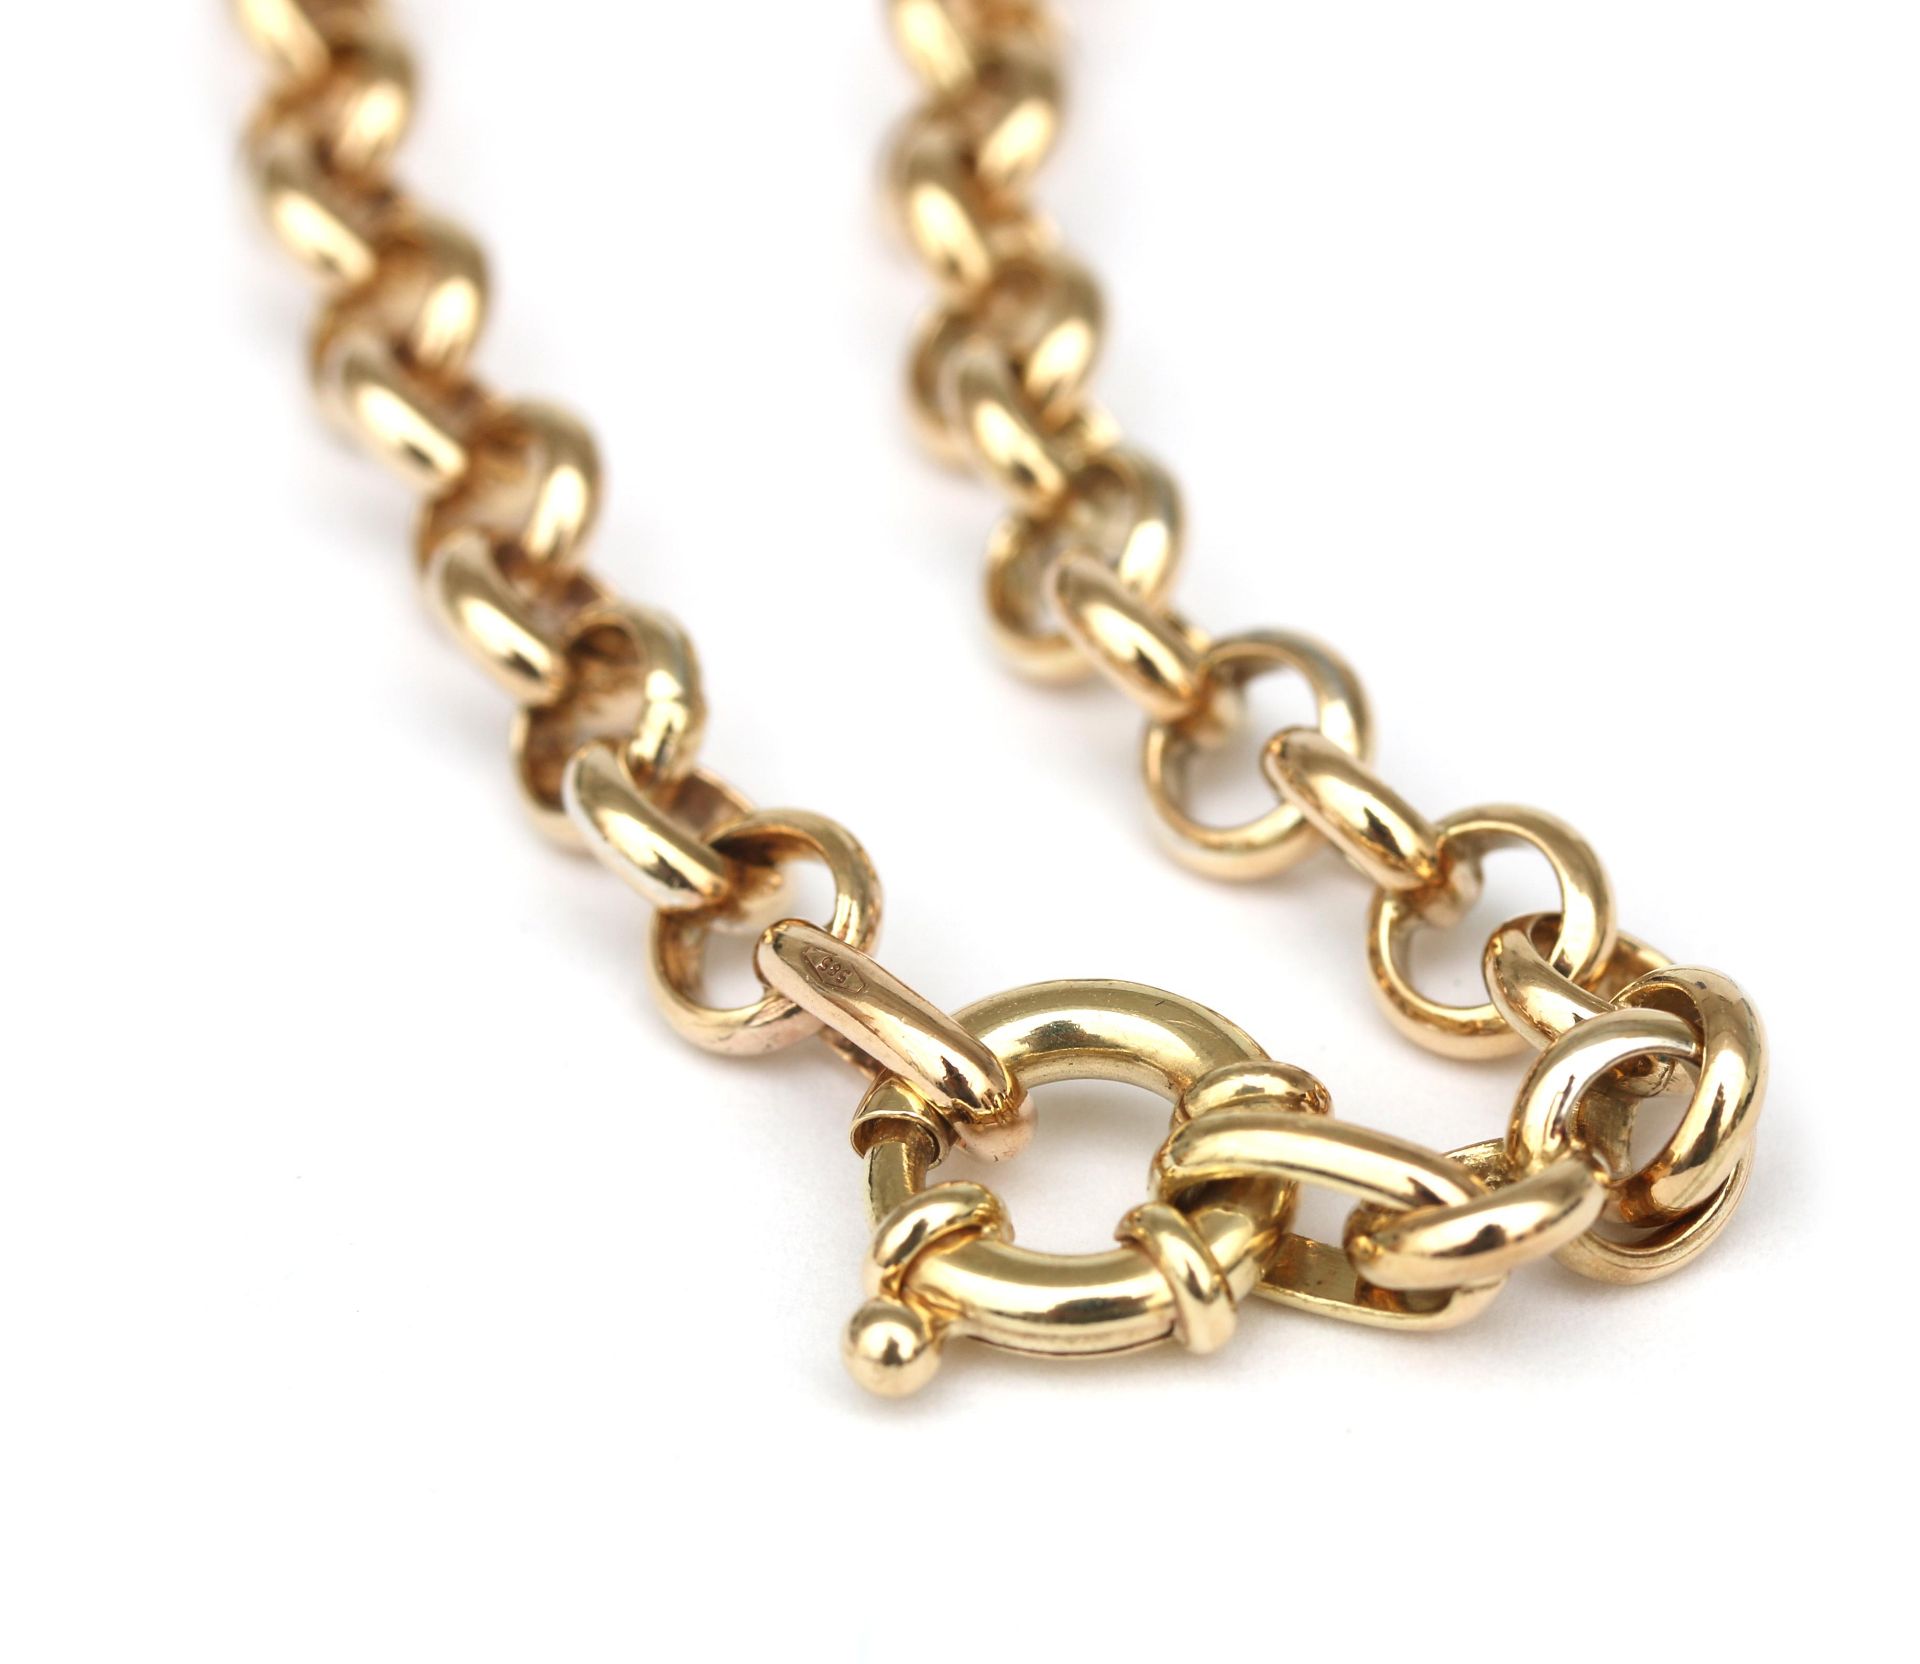 A 14 karat gold link necklace